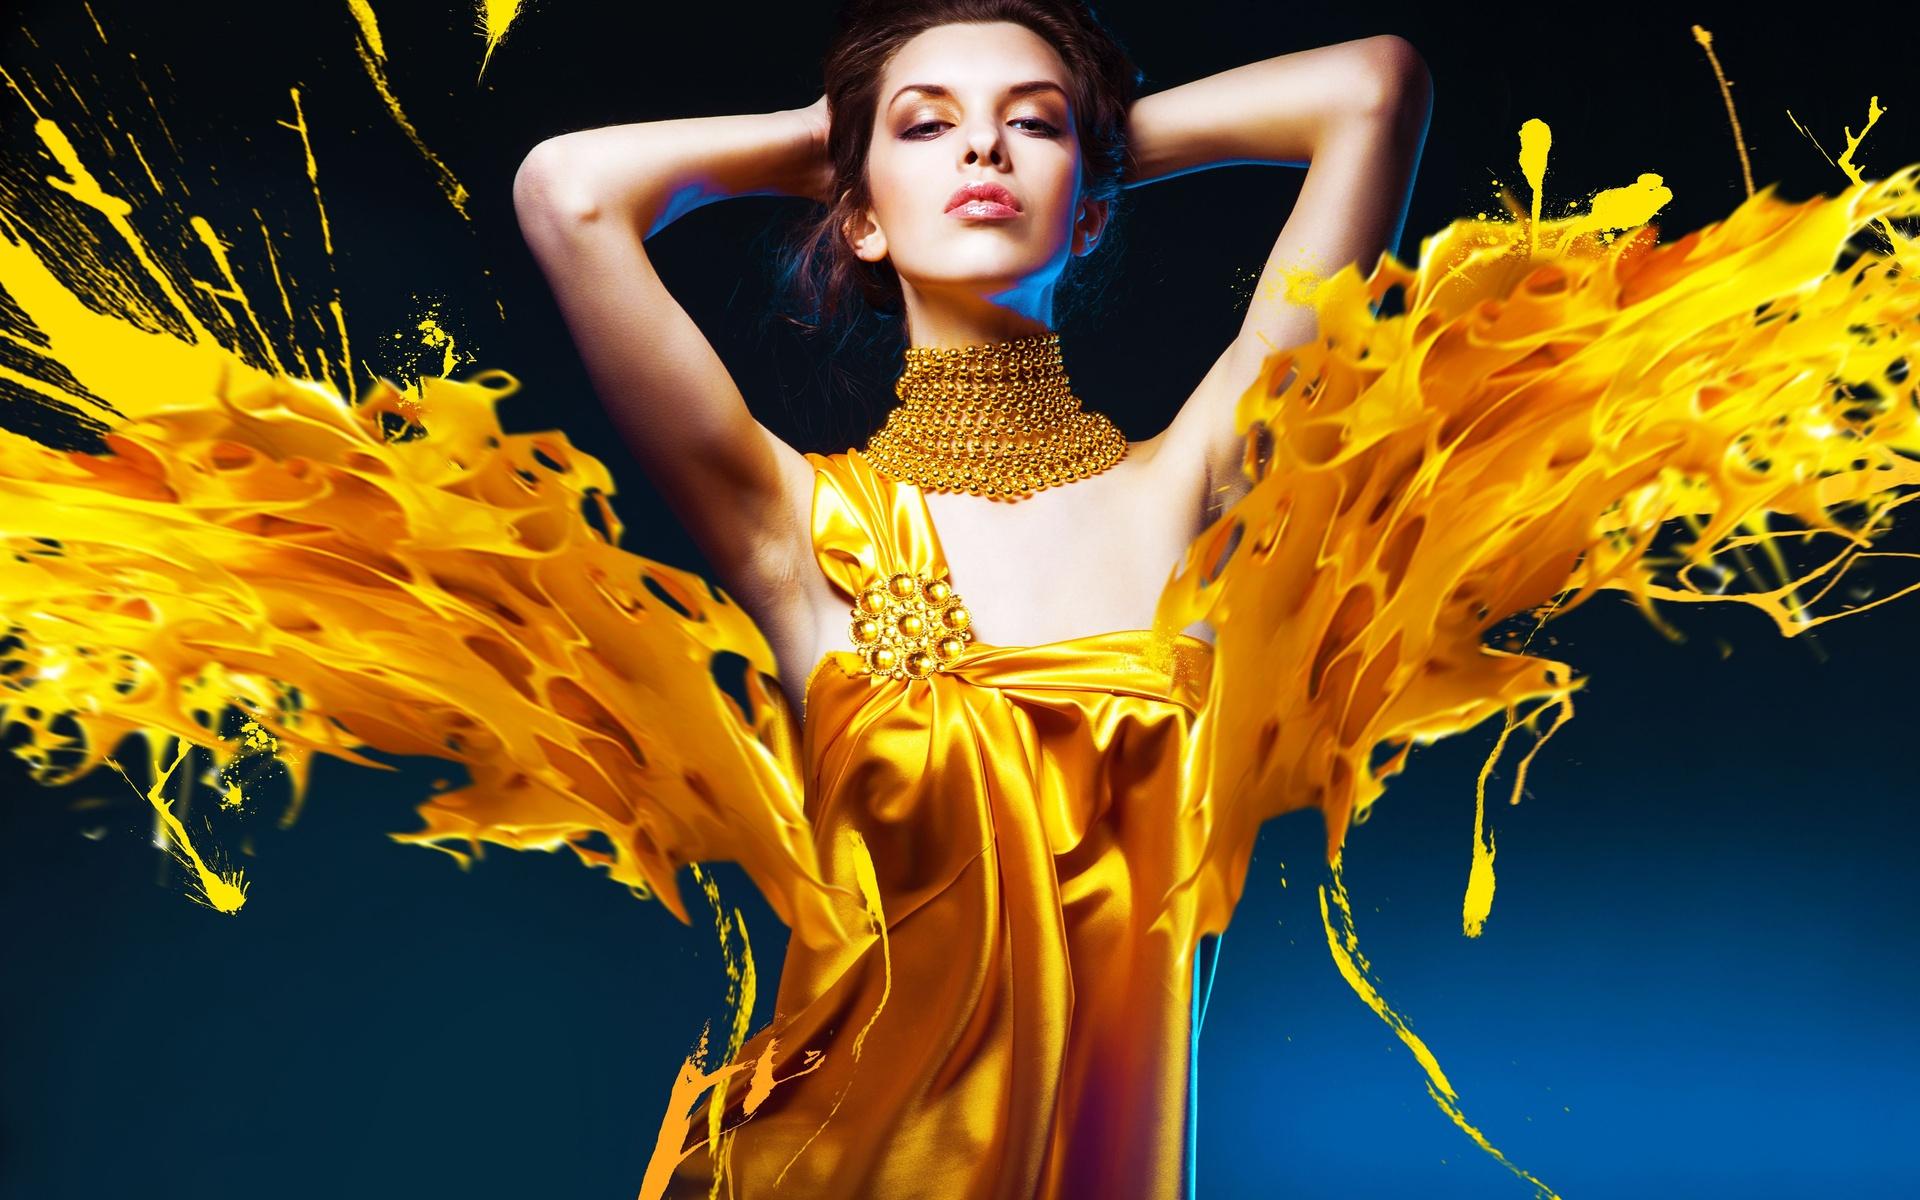 Beautiful fashion girl HD wallpapers free download | Wallpaperbetter